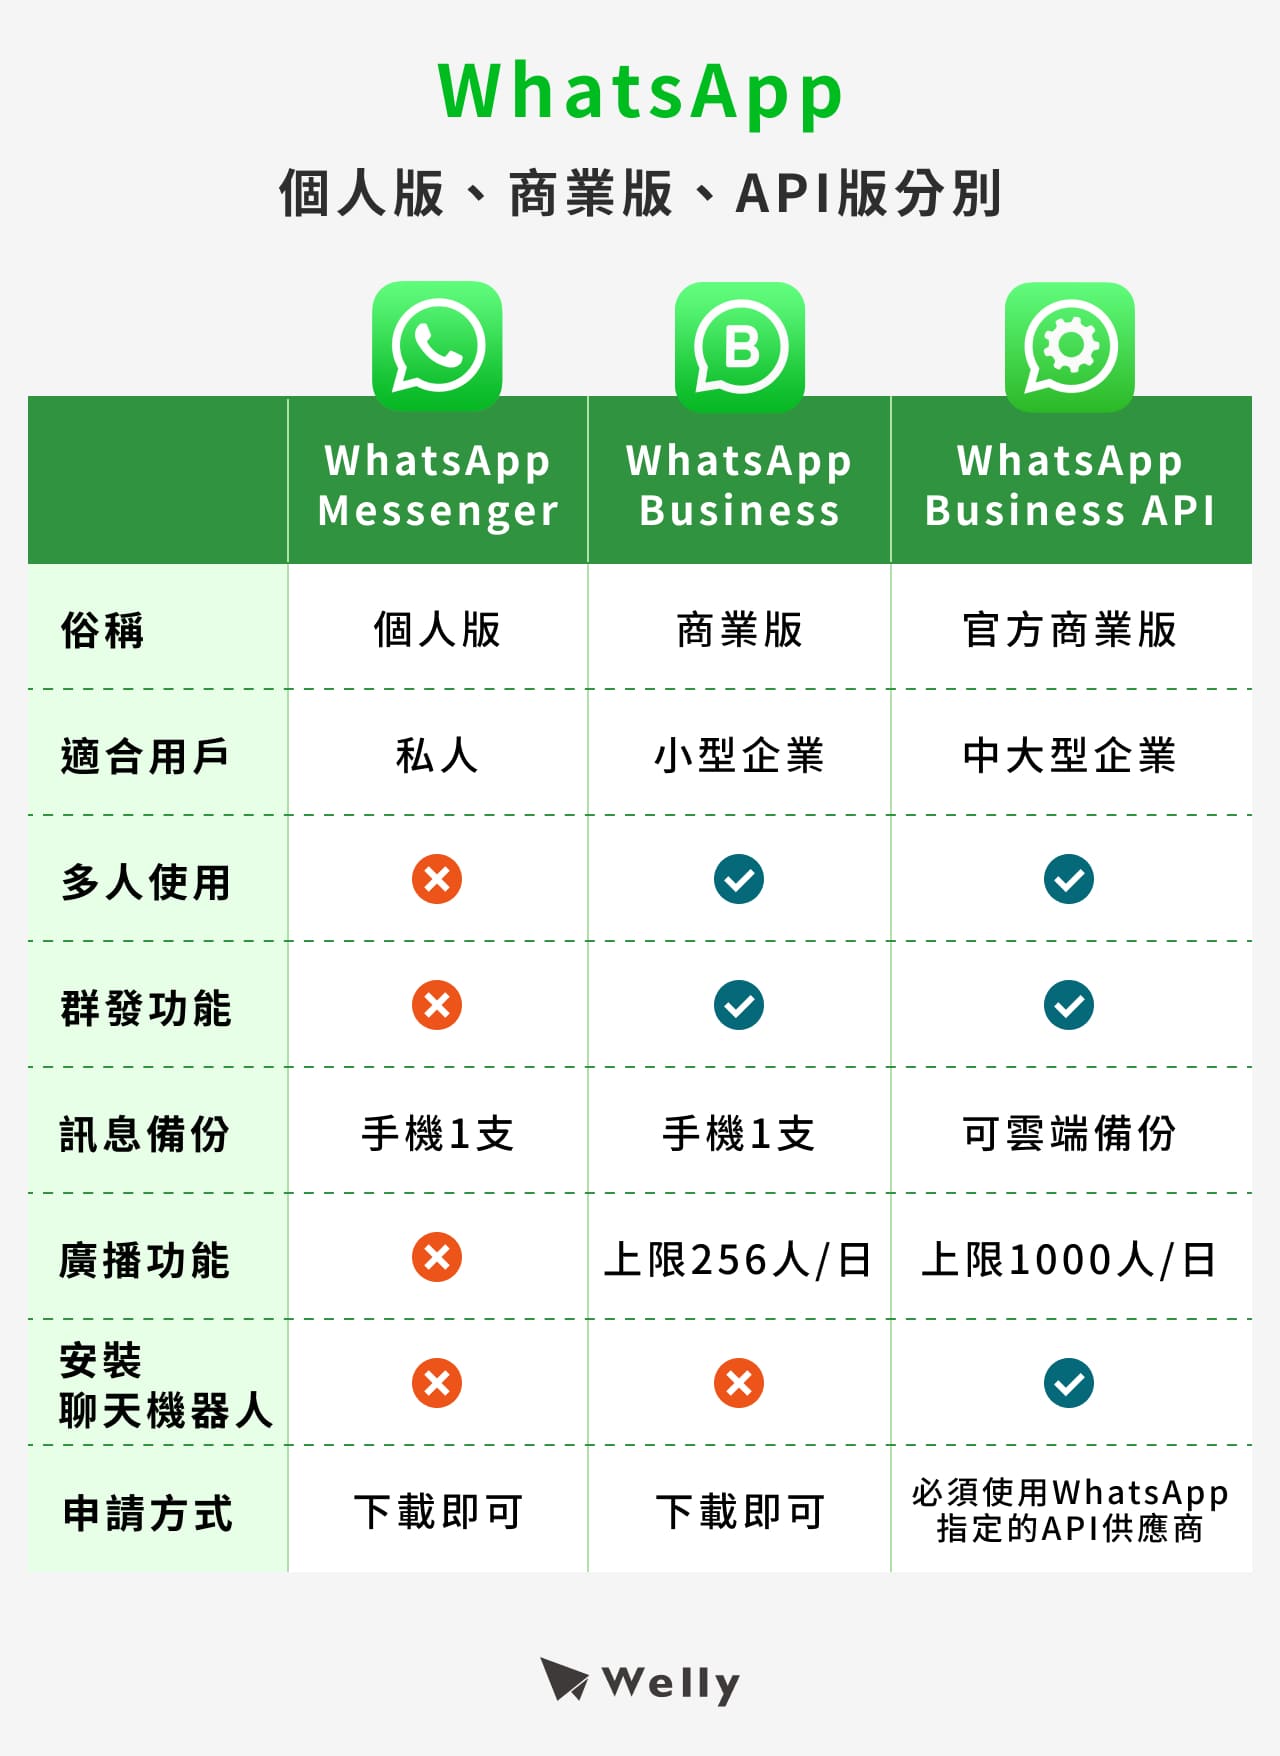 個人版、API版與WhatsApp Business分別